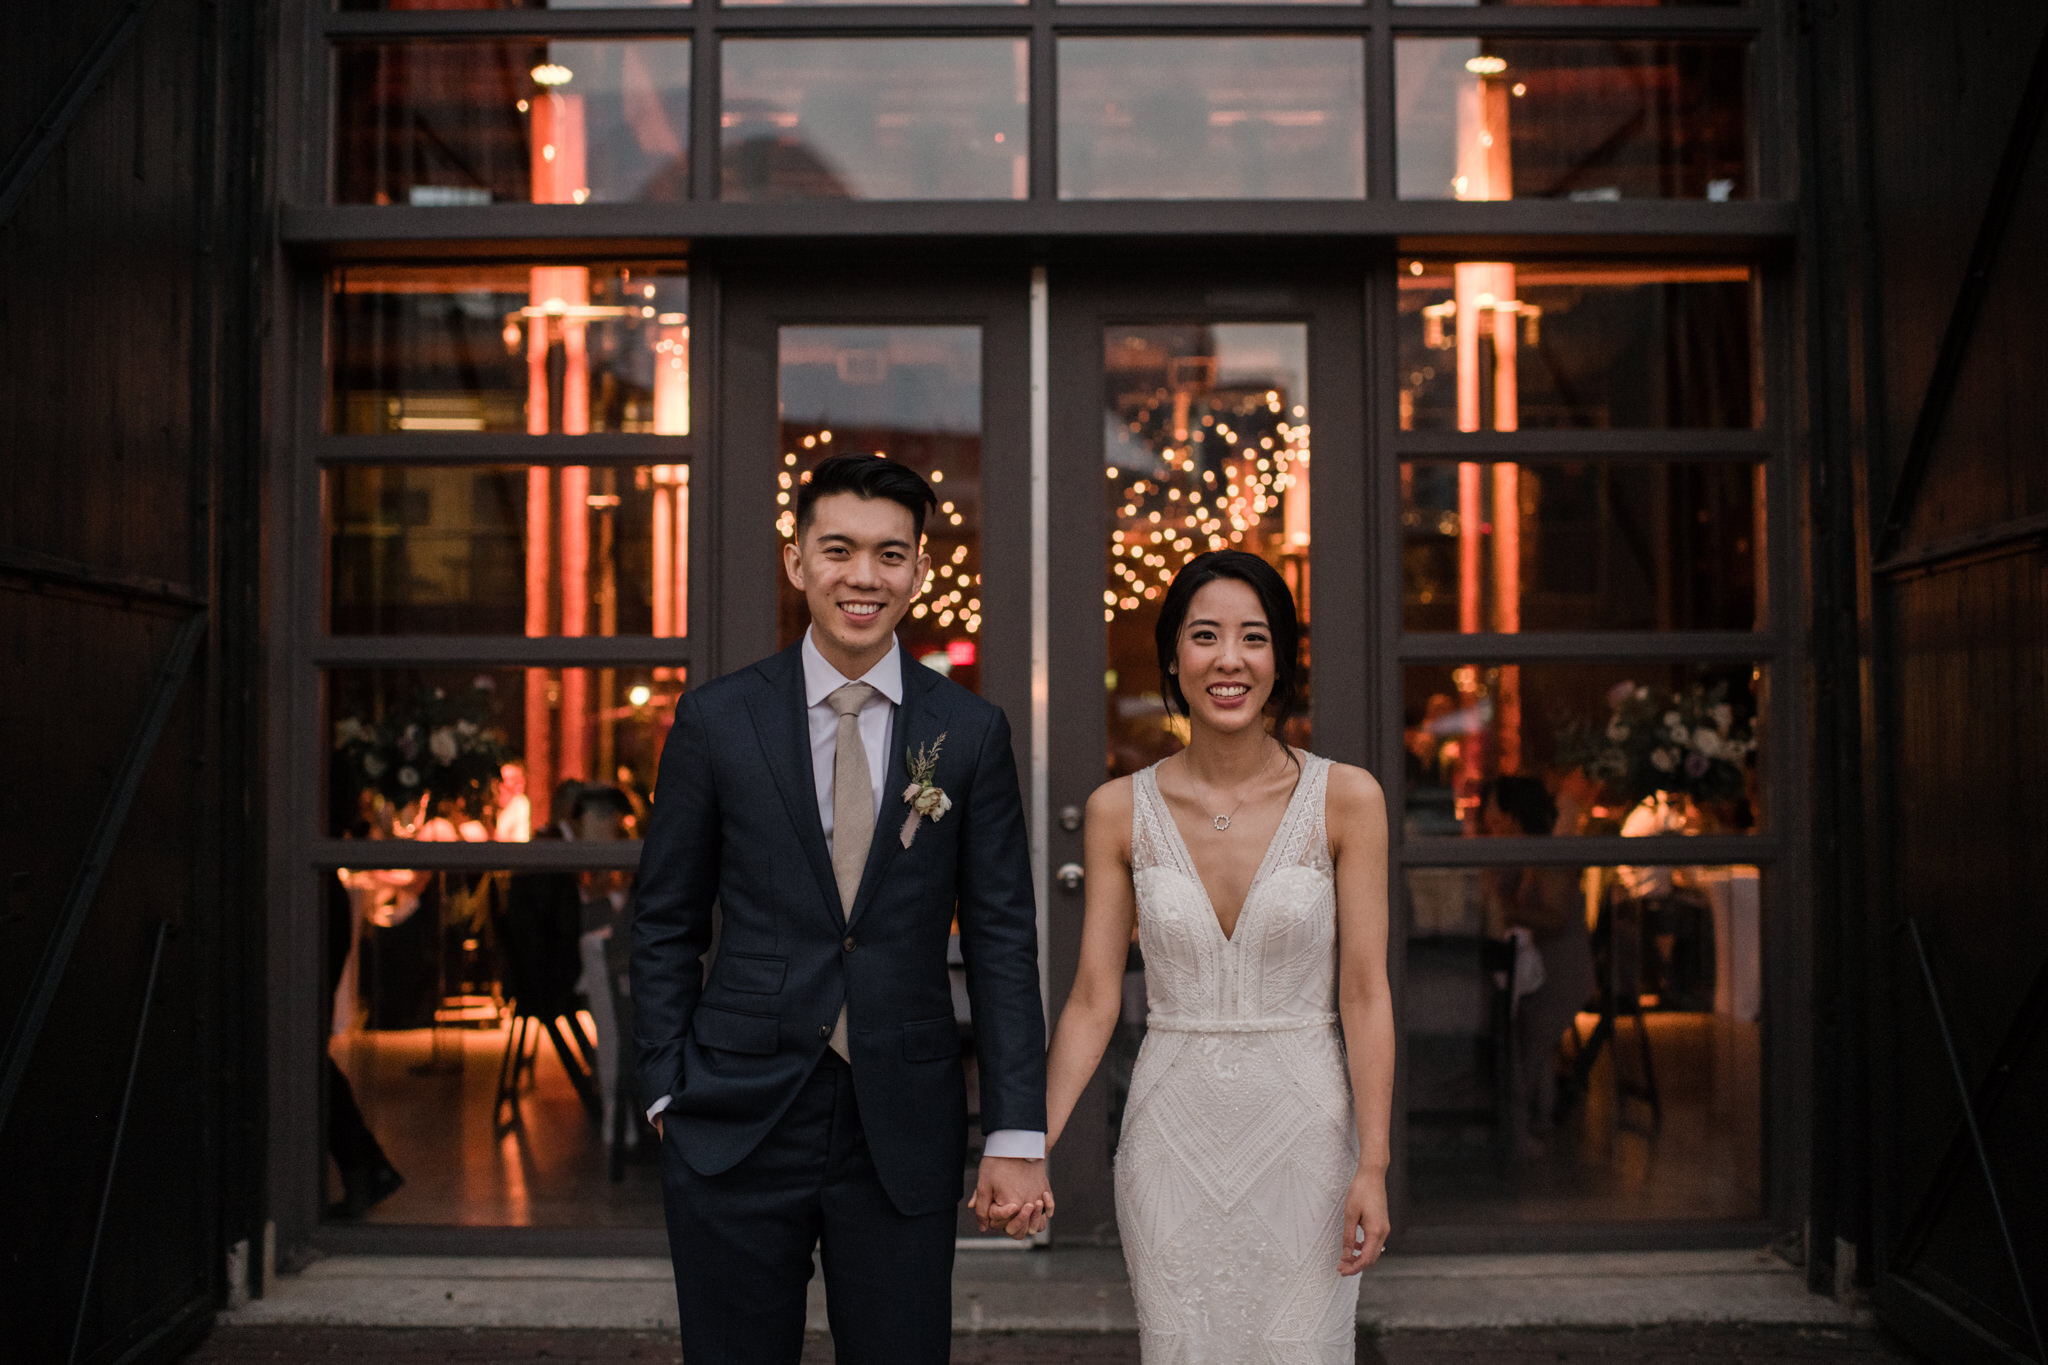 139-bride-groom-wedding-couple-photos-steamwhistle-downtown-toronto-reception-string-lights.jpg